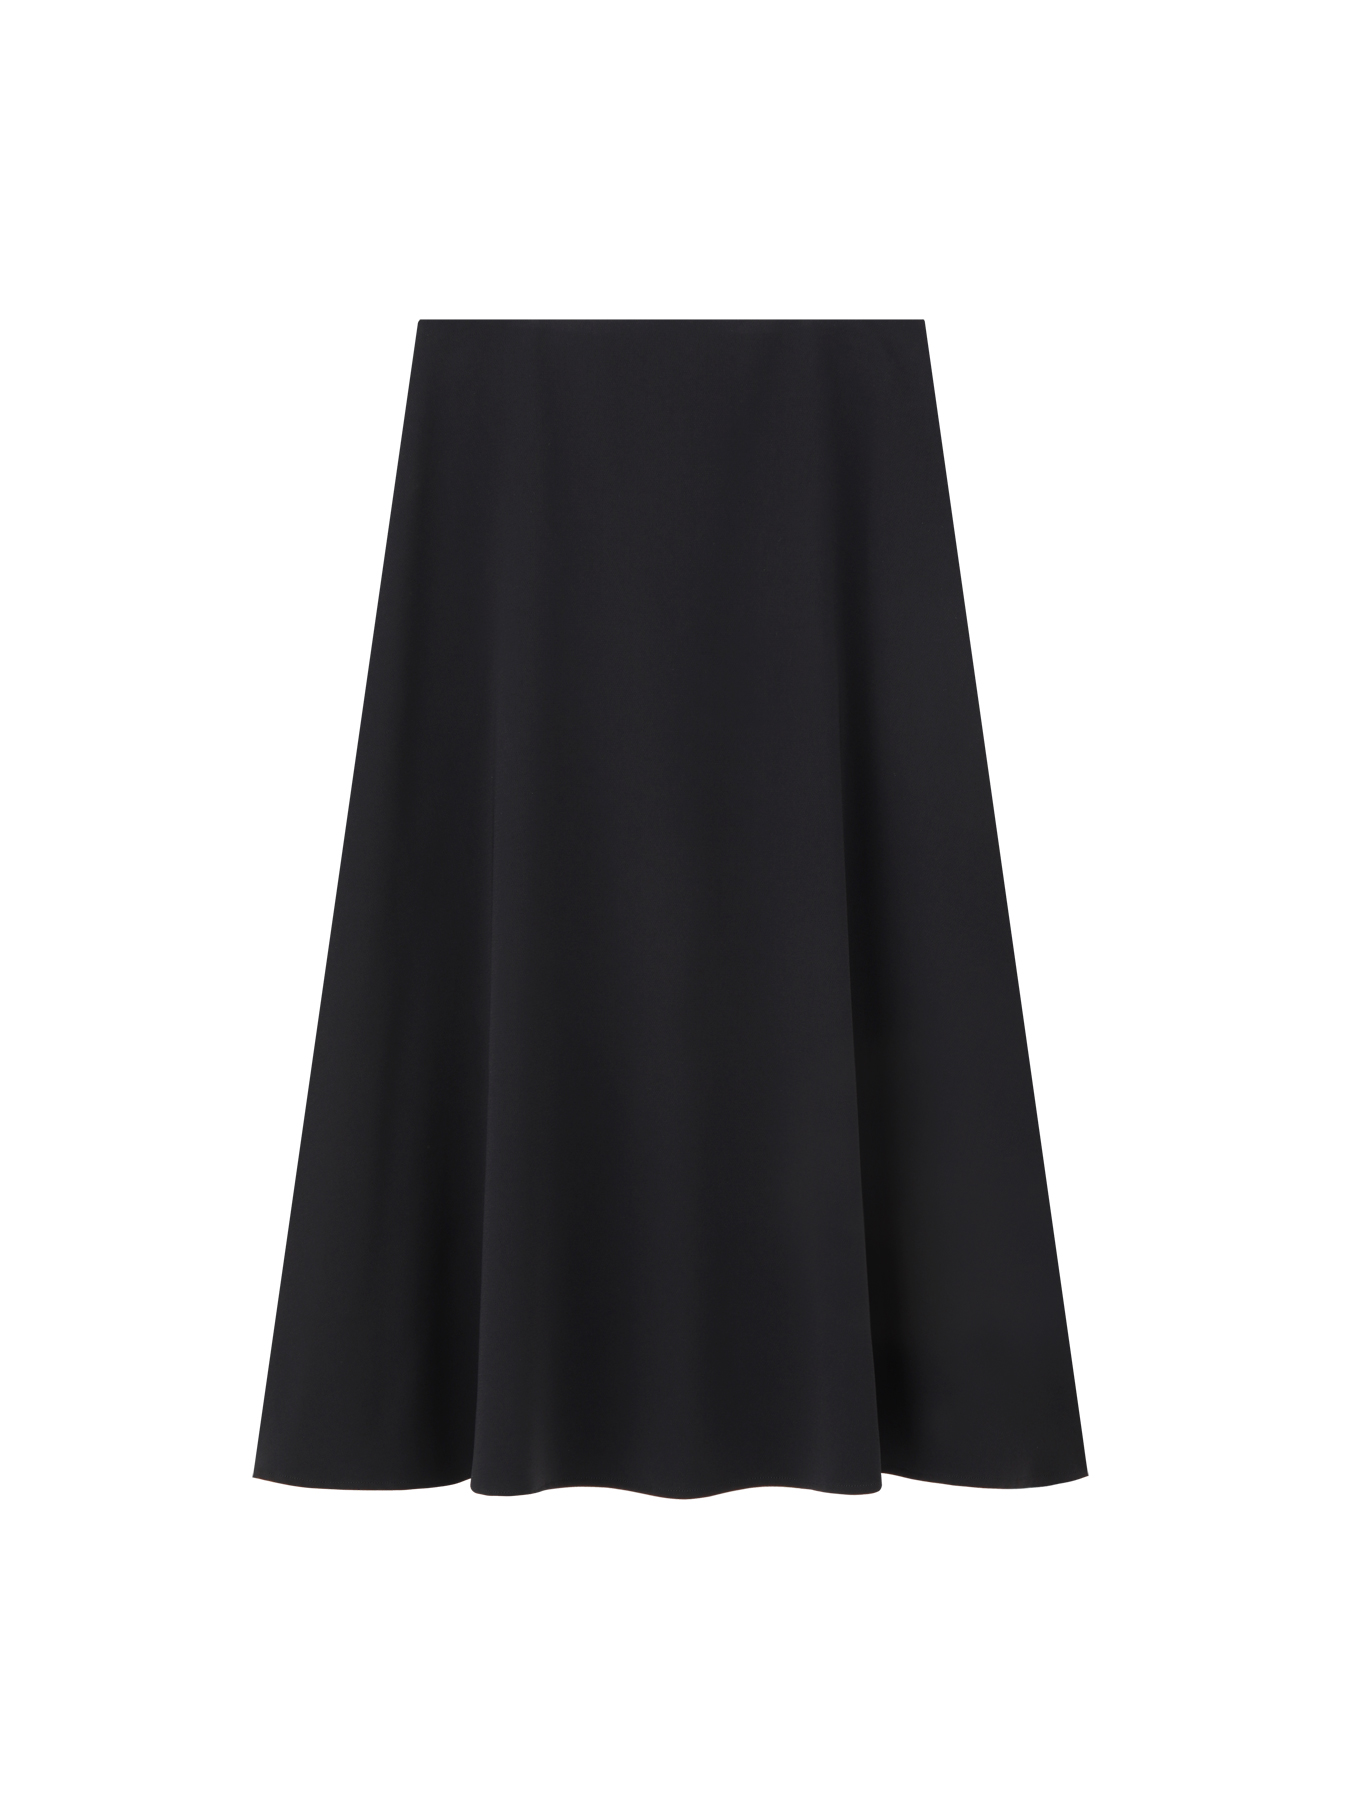 0336 M-premier BLACK ロングスカート 38サイズ ブラック